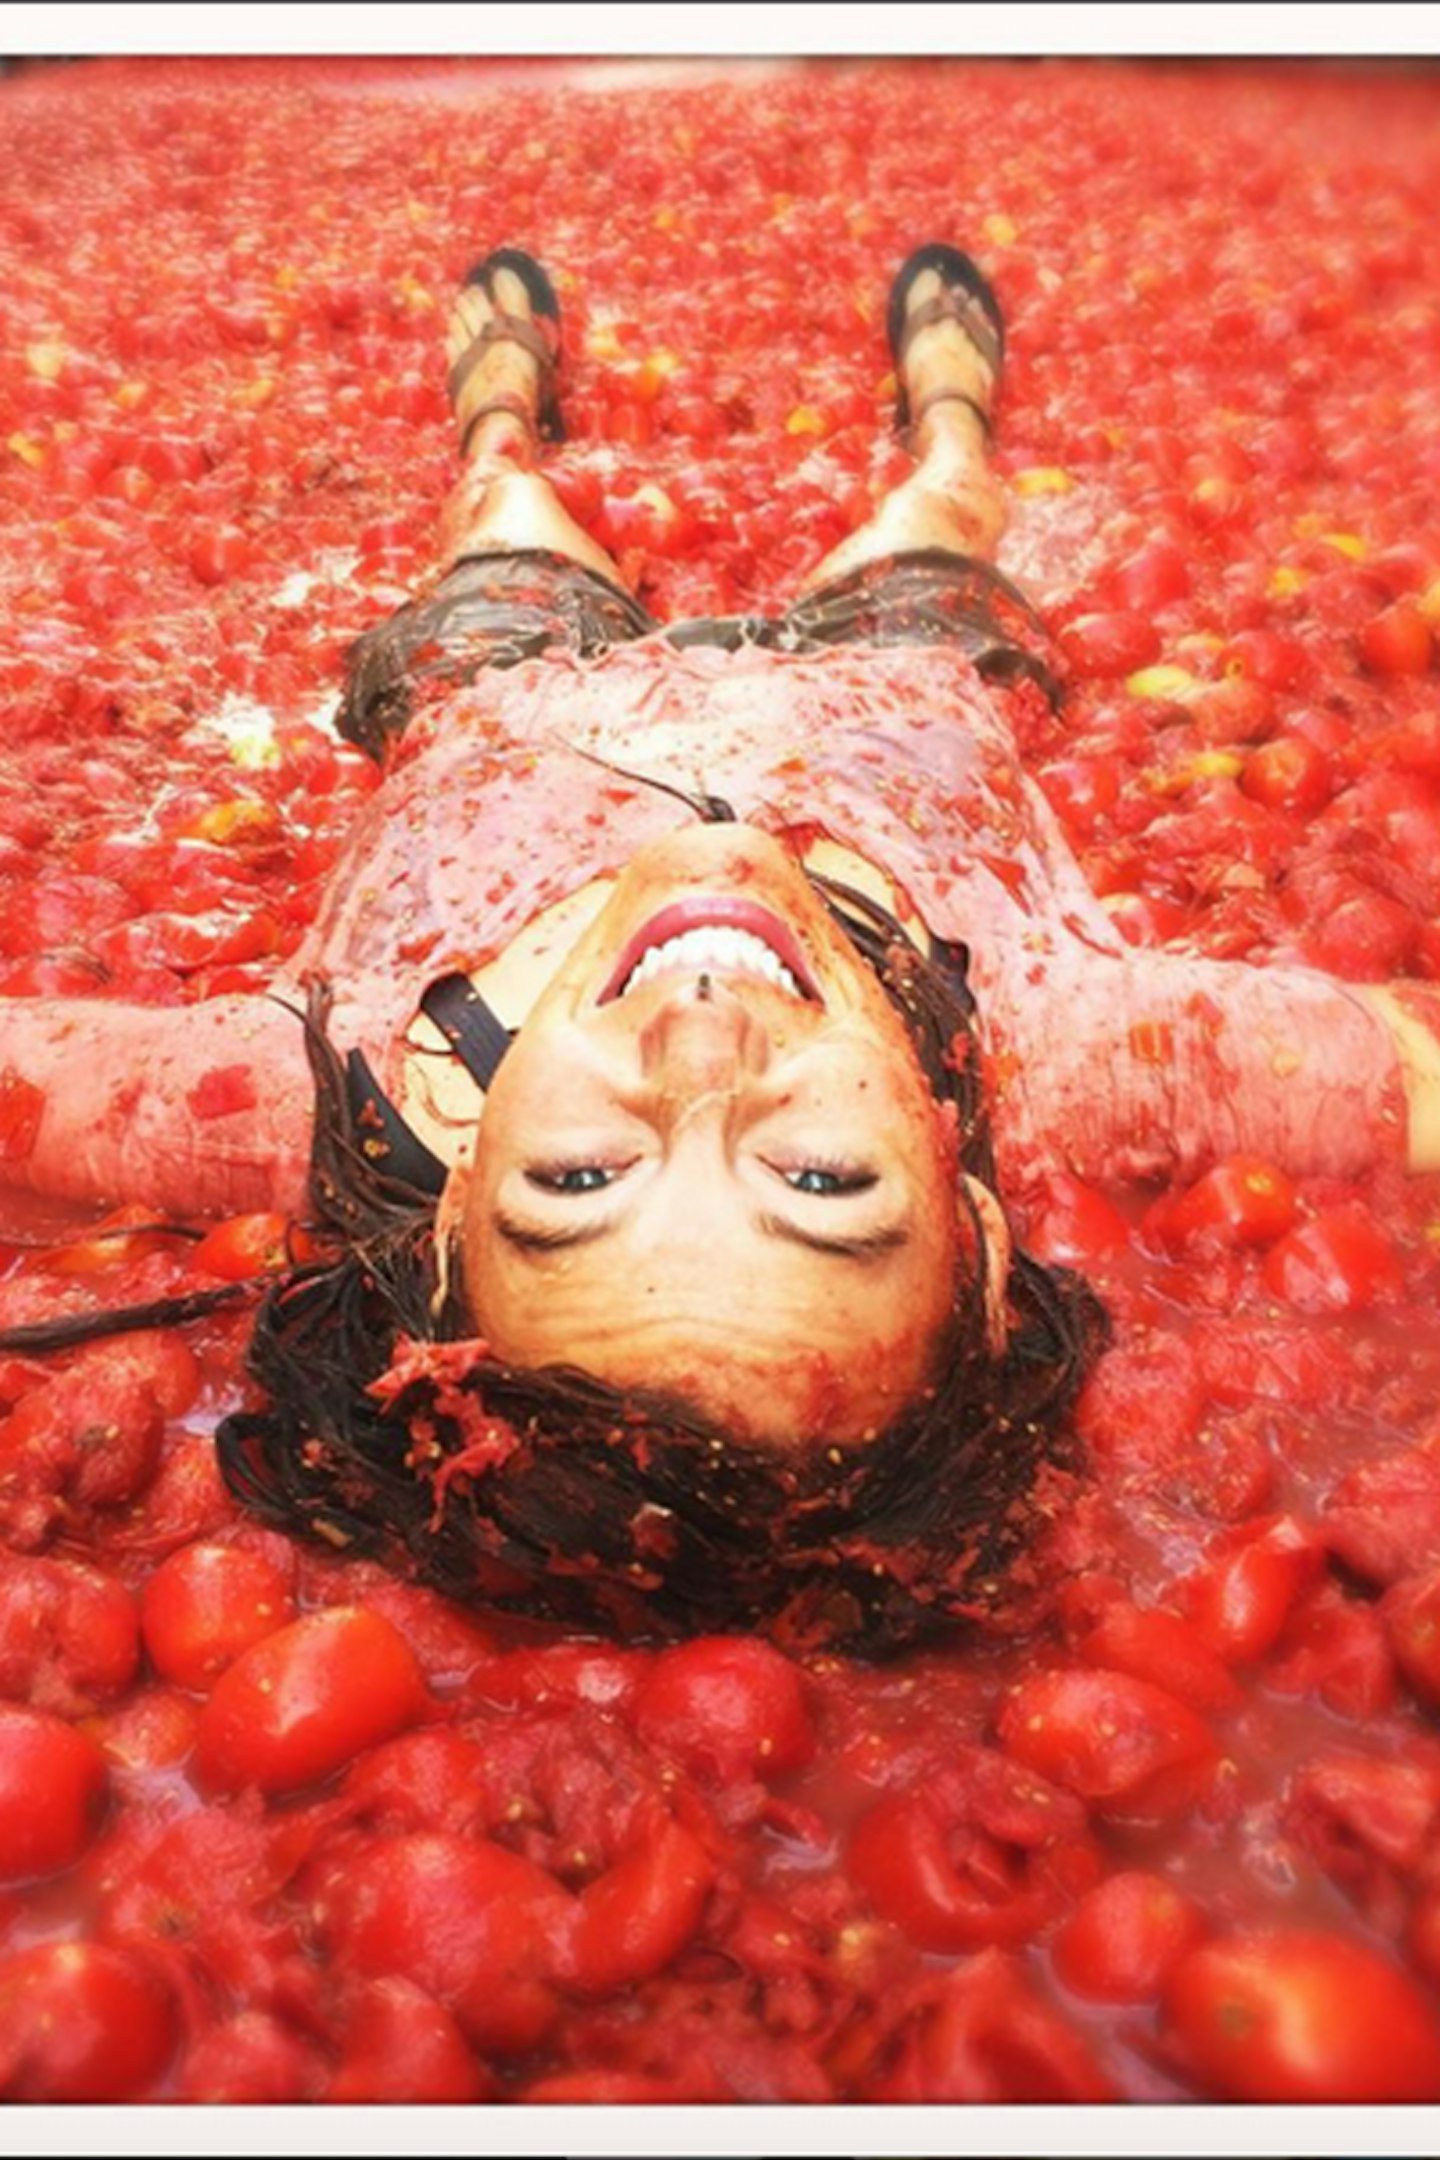 blake-lively-instagram-tomatoes